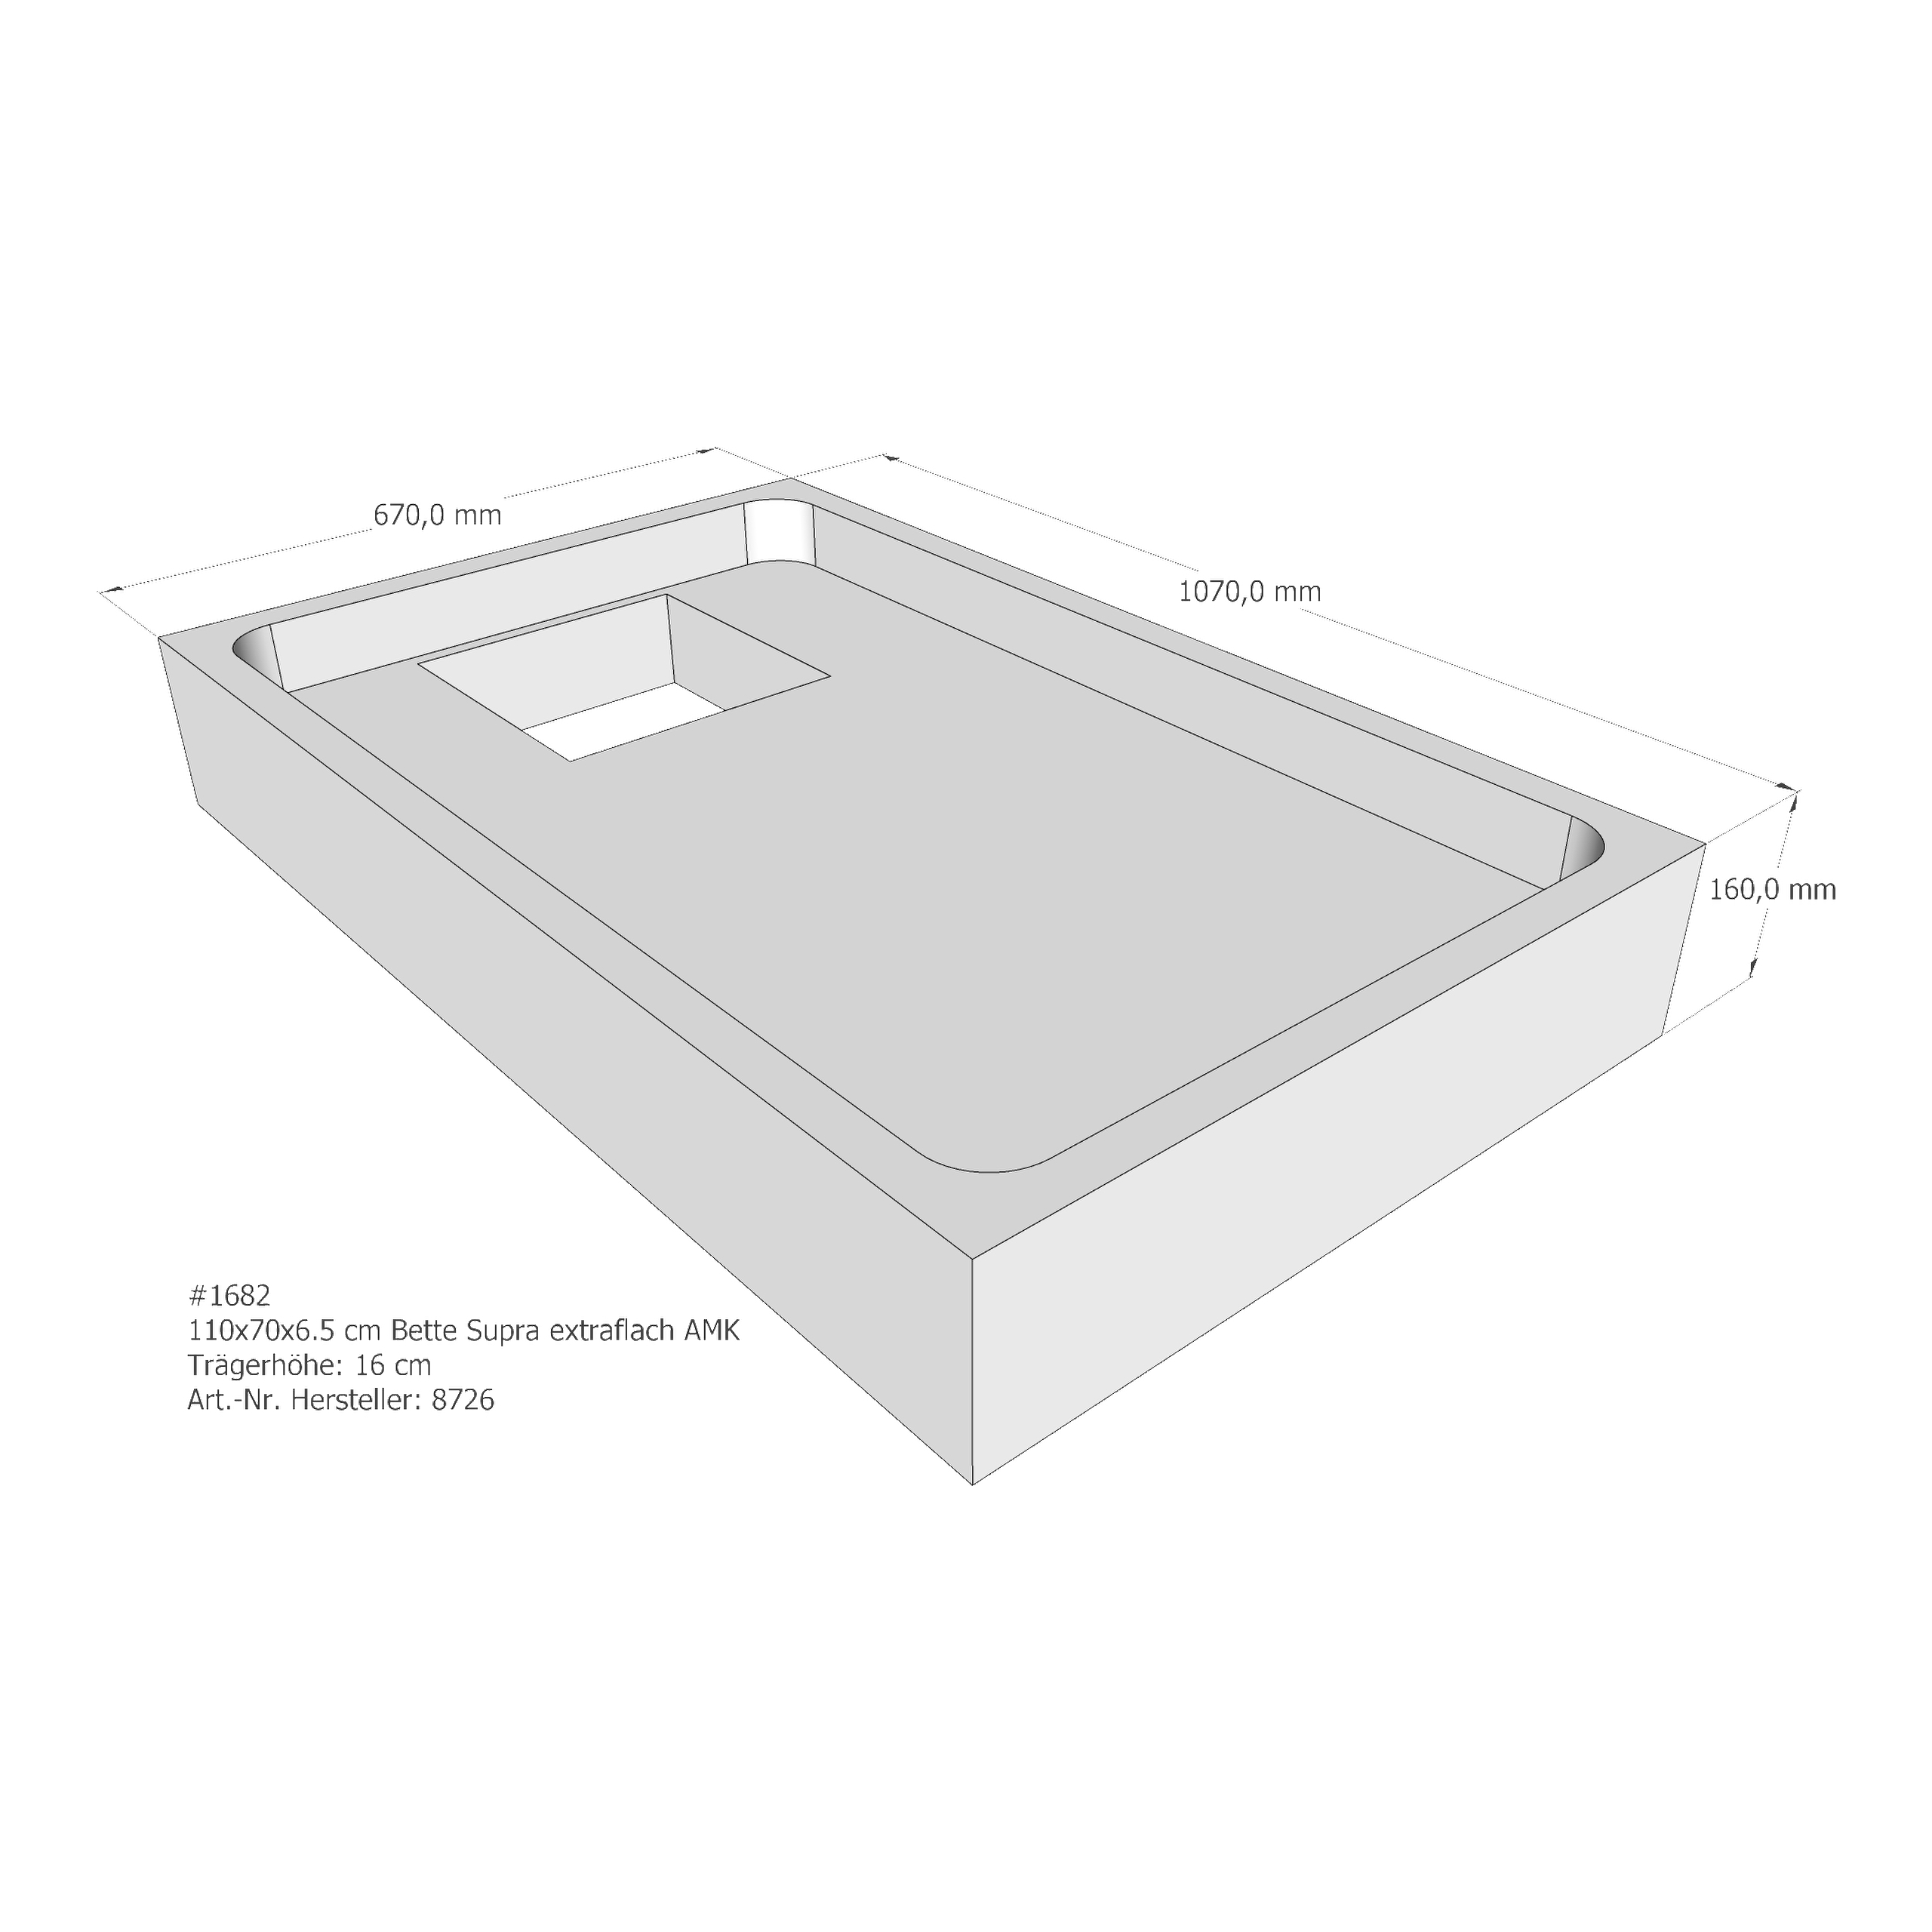 Duschwannenträger Bette BetteSupra (extraflach) 110x70x6,5 cm AMK210